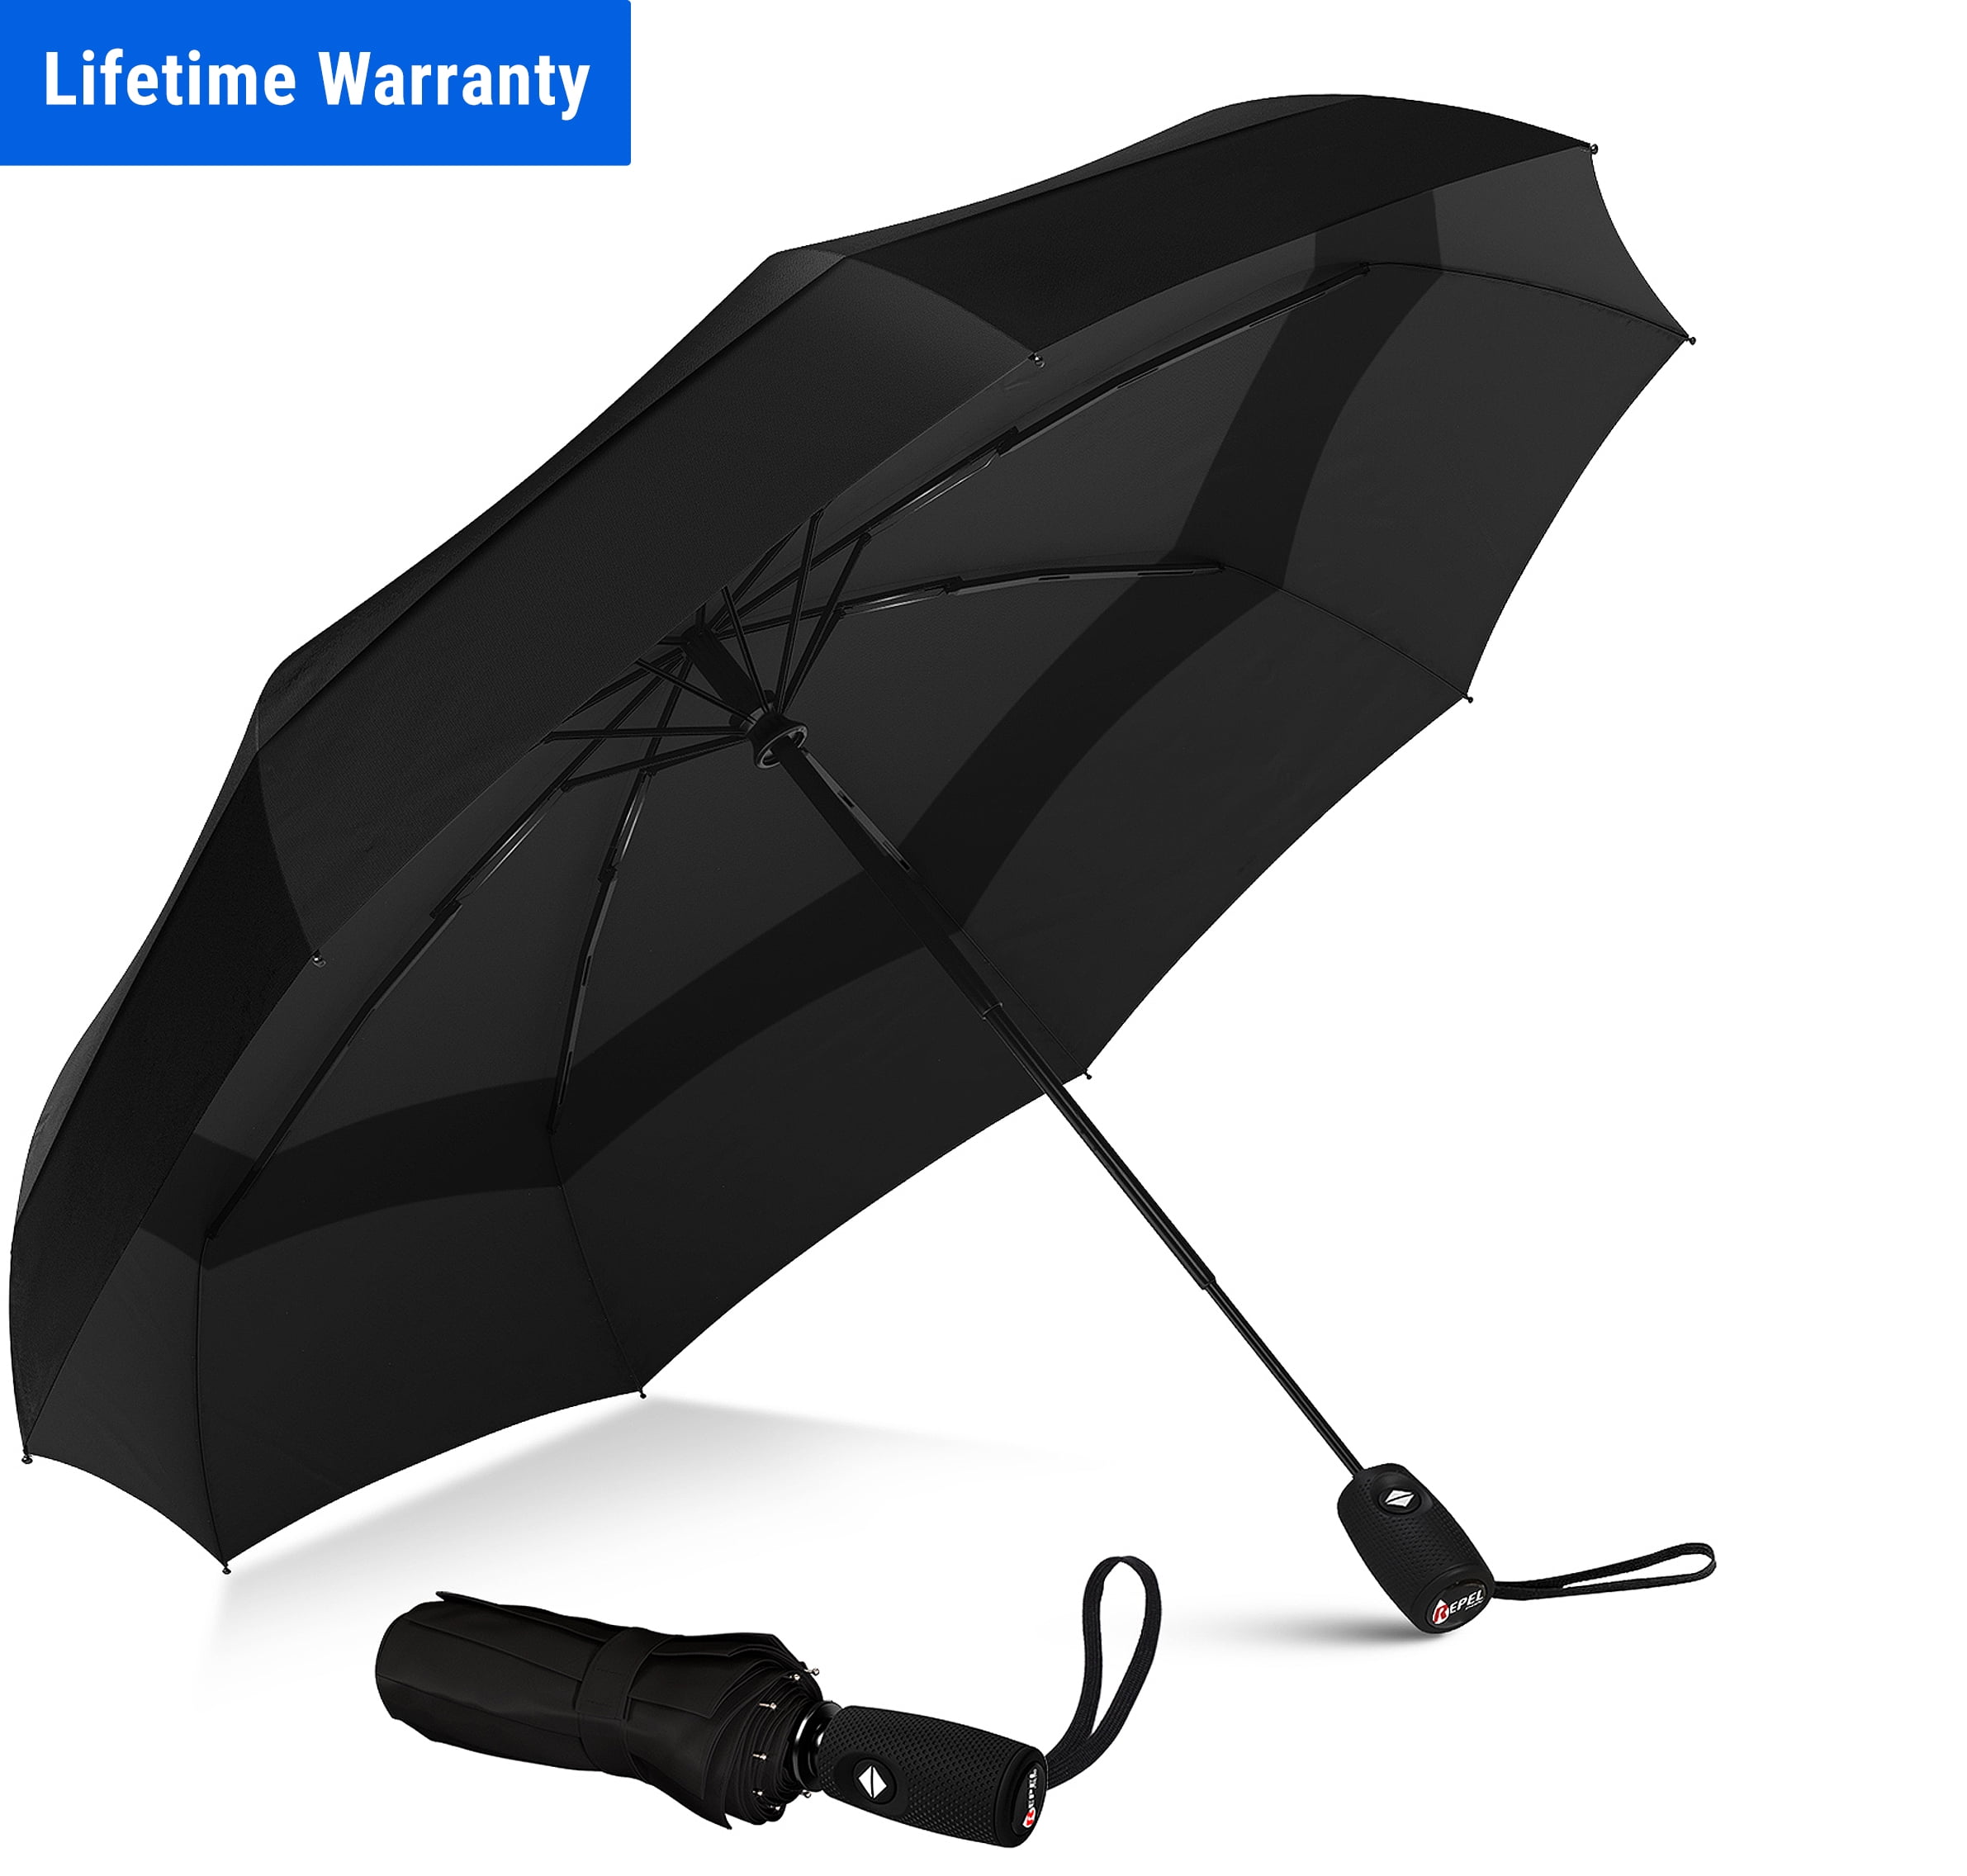 Anti-UV Compact 5 Folding Mini Travel Umbrella for Sun and Rain Lightweight Strong Aluminum Ribs Portable Parasol Outdoor Umbrellas for Kids Women 